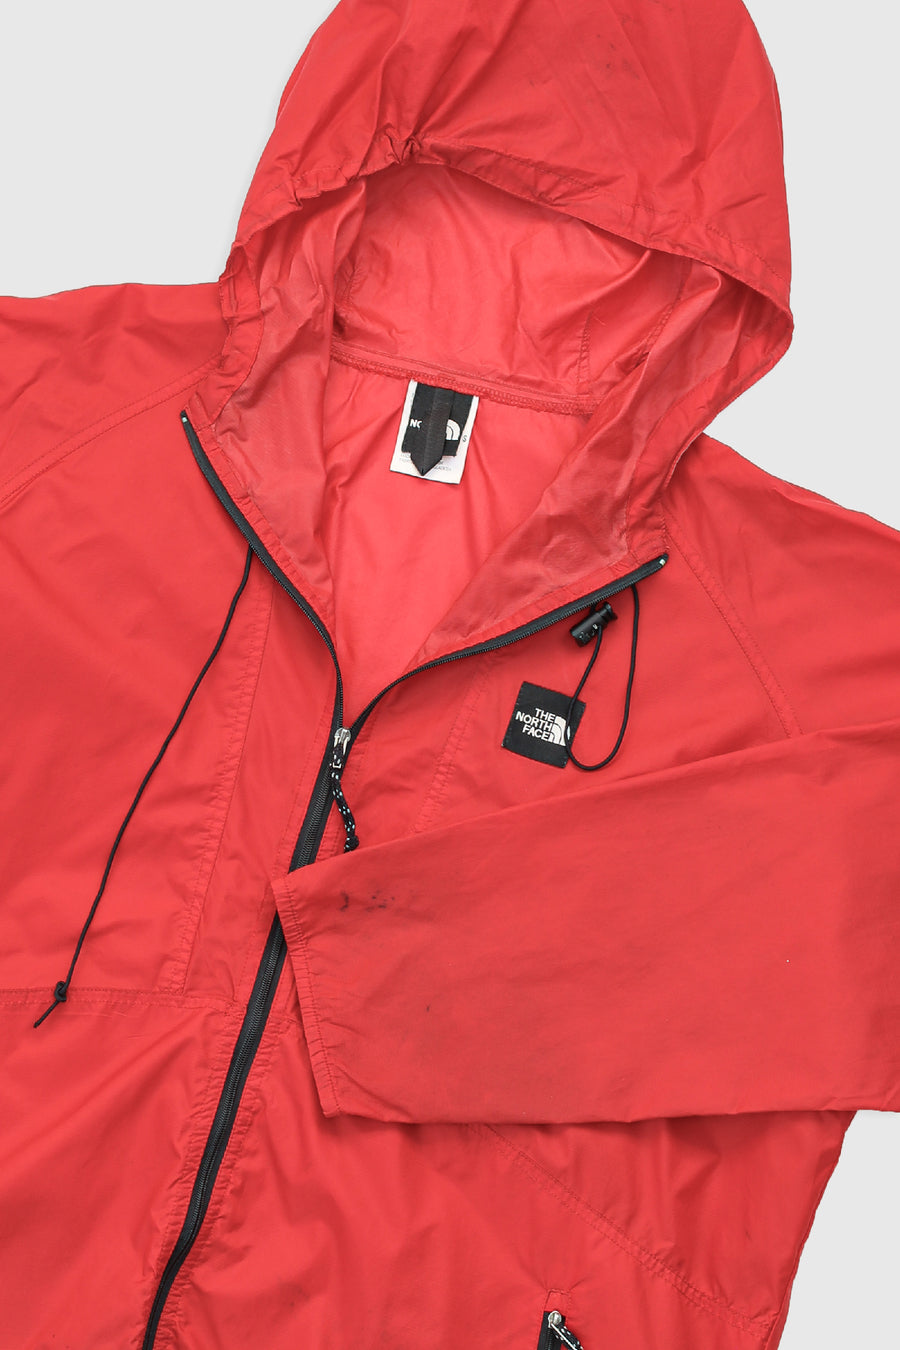 Vintage North Face Rain Jacket - Men's XL